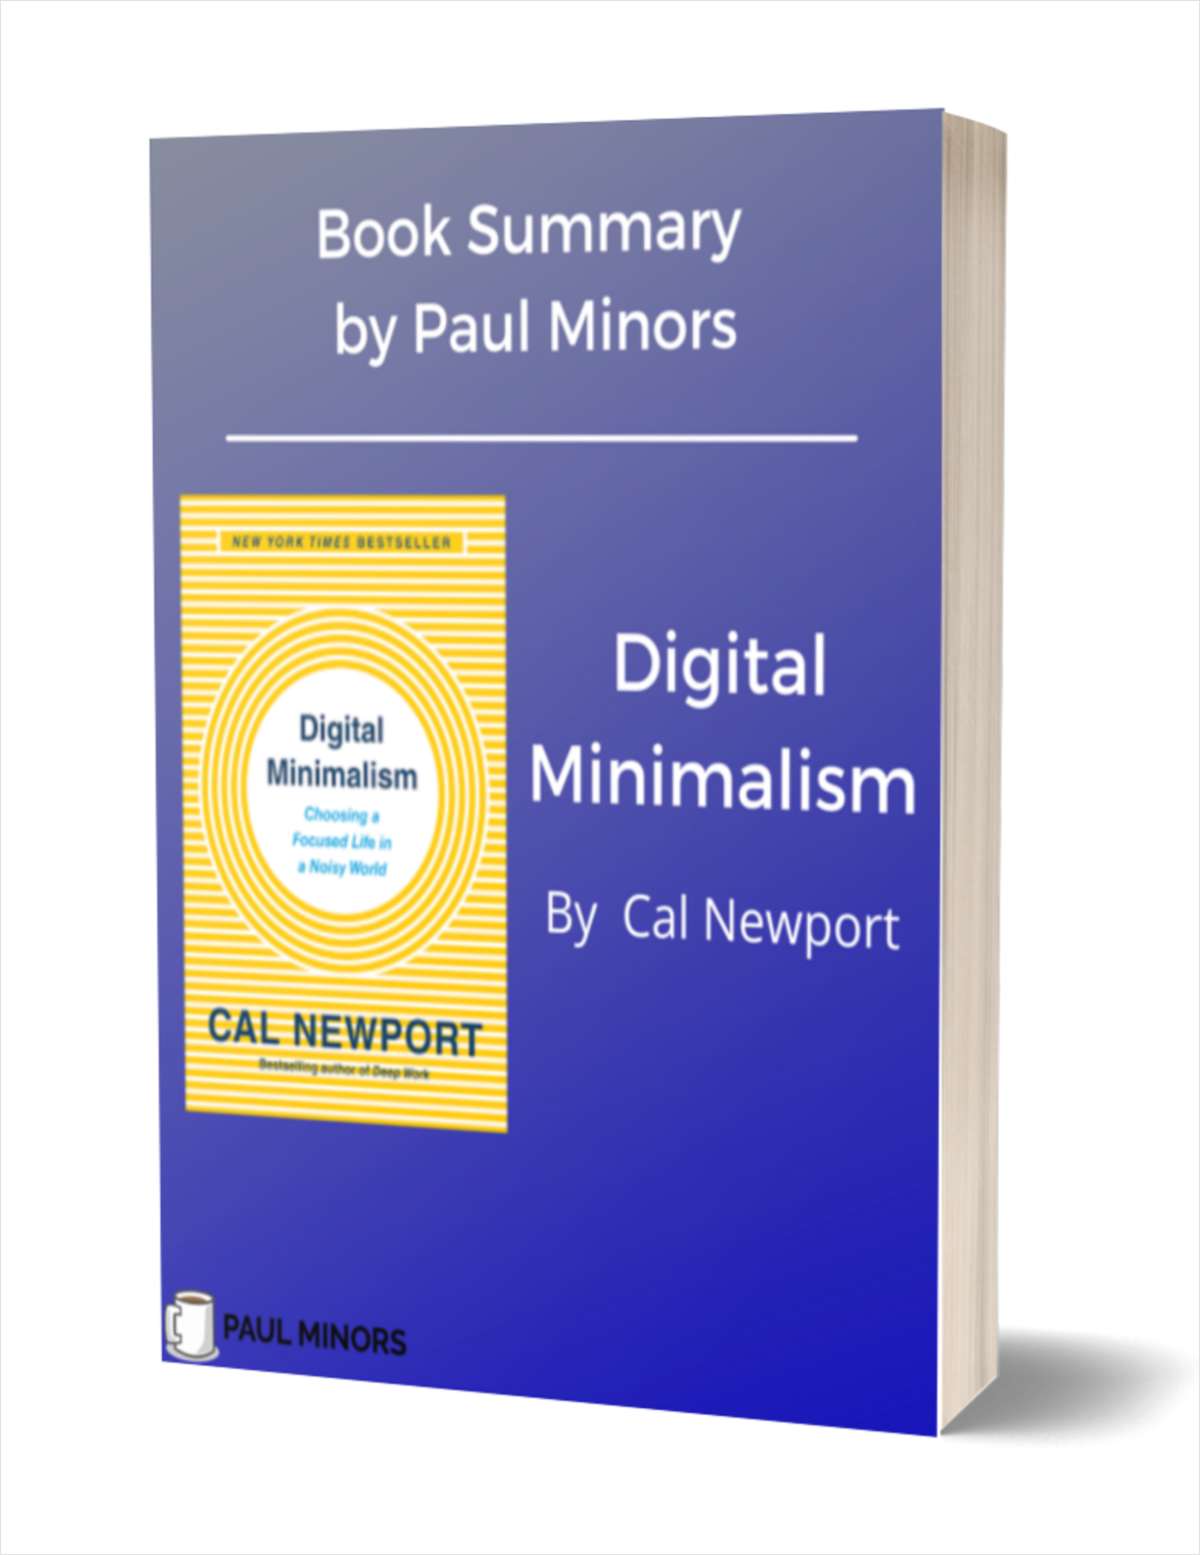 Digital Minimalism Book Summary